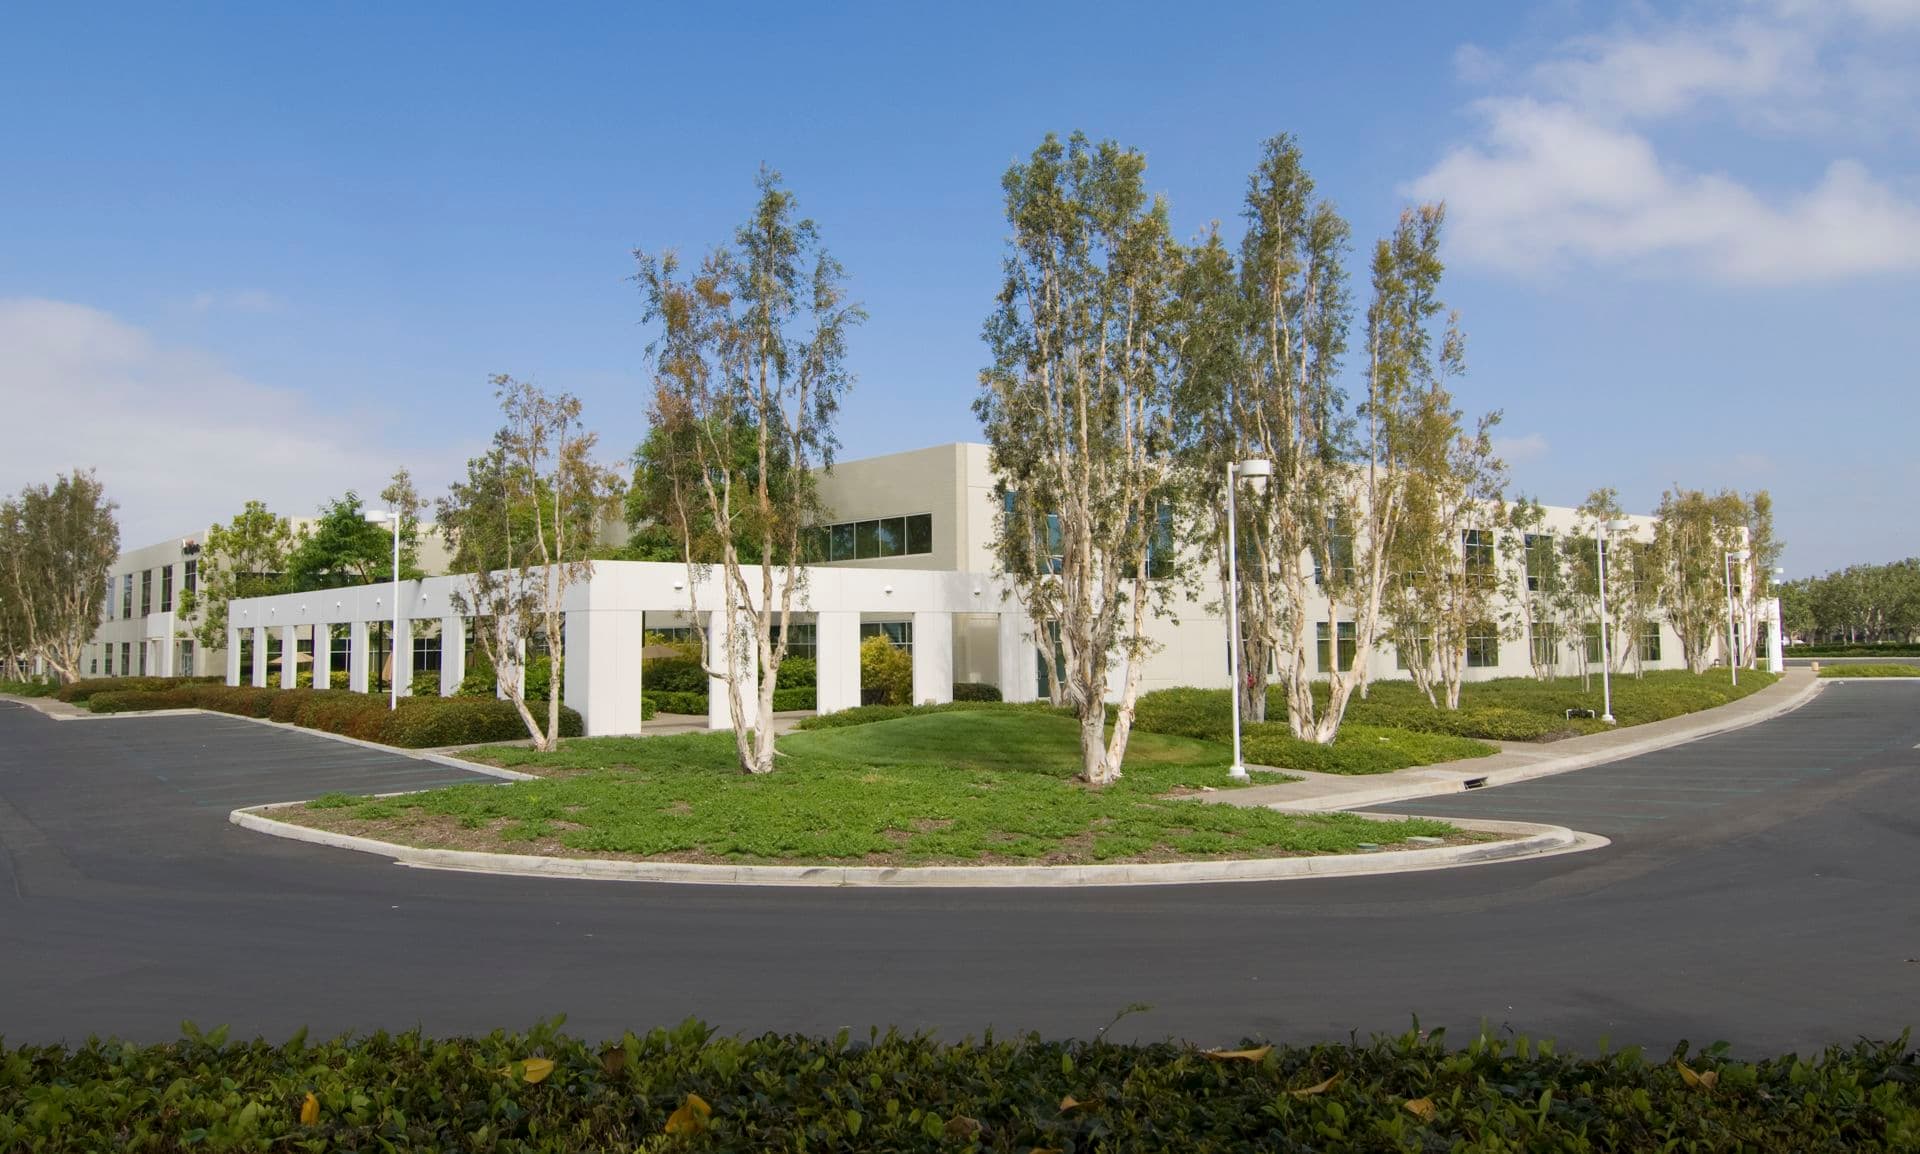 Exterior Shot - Corporate Business Center - 133 Technology Drive  Irvine, CA 92618